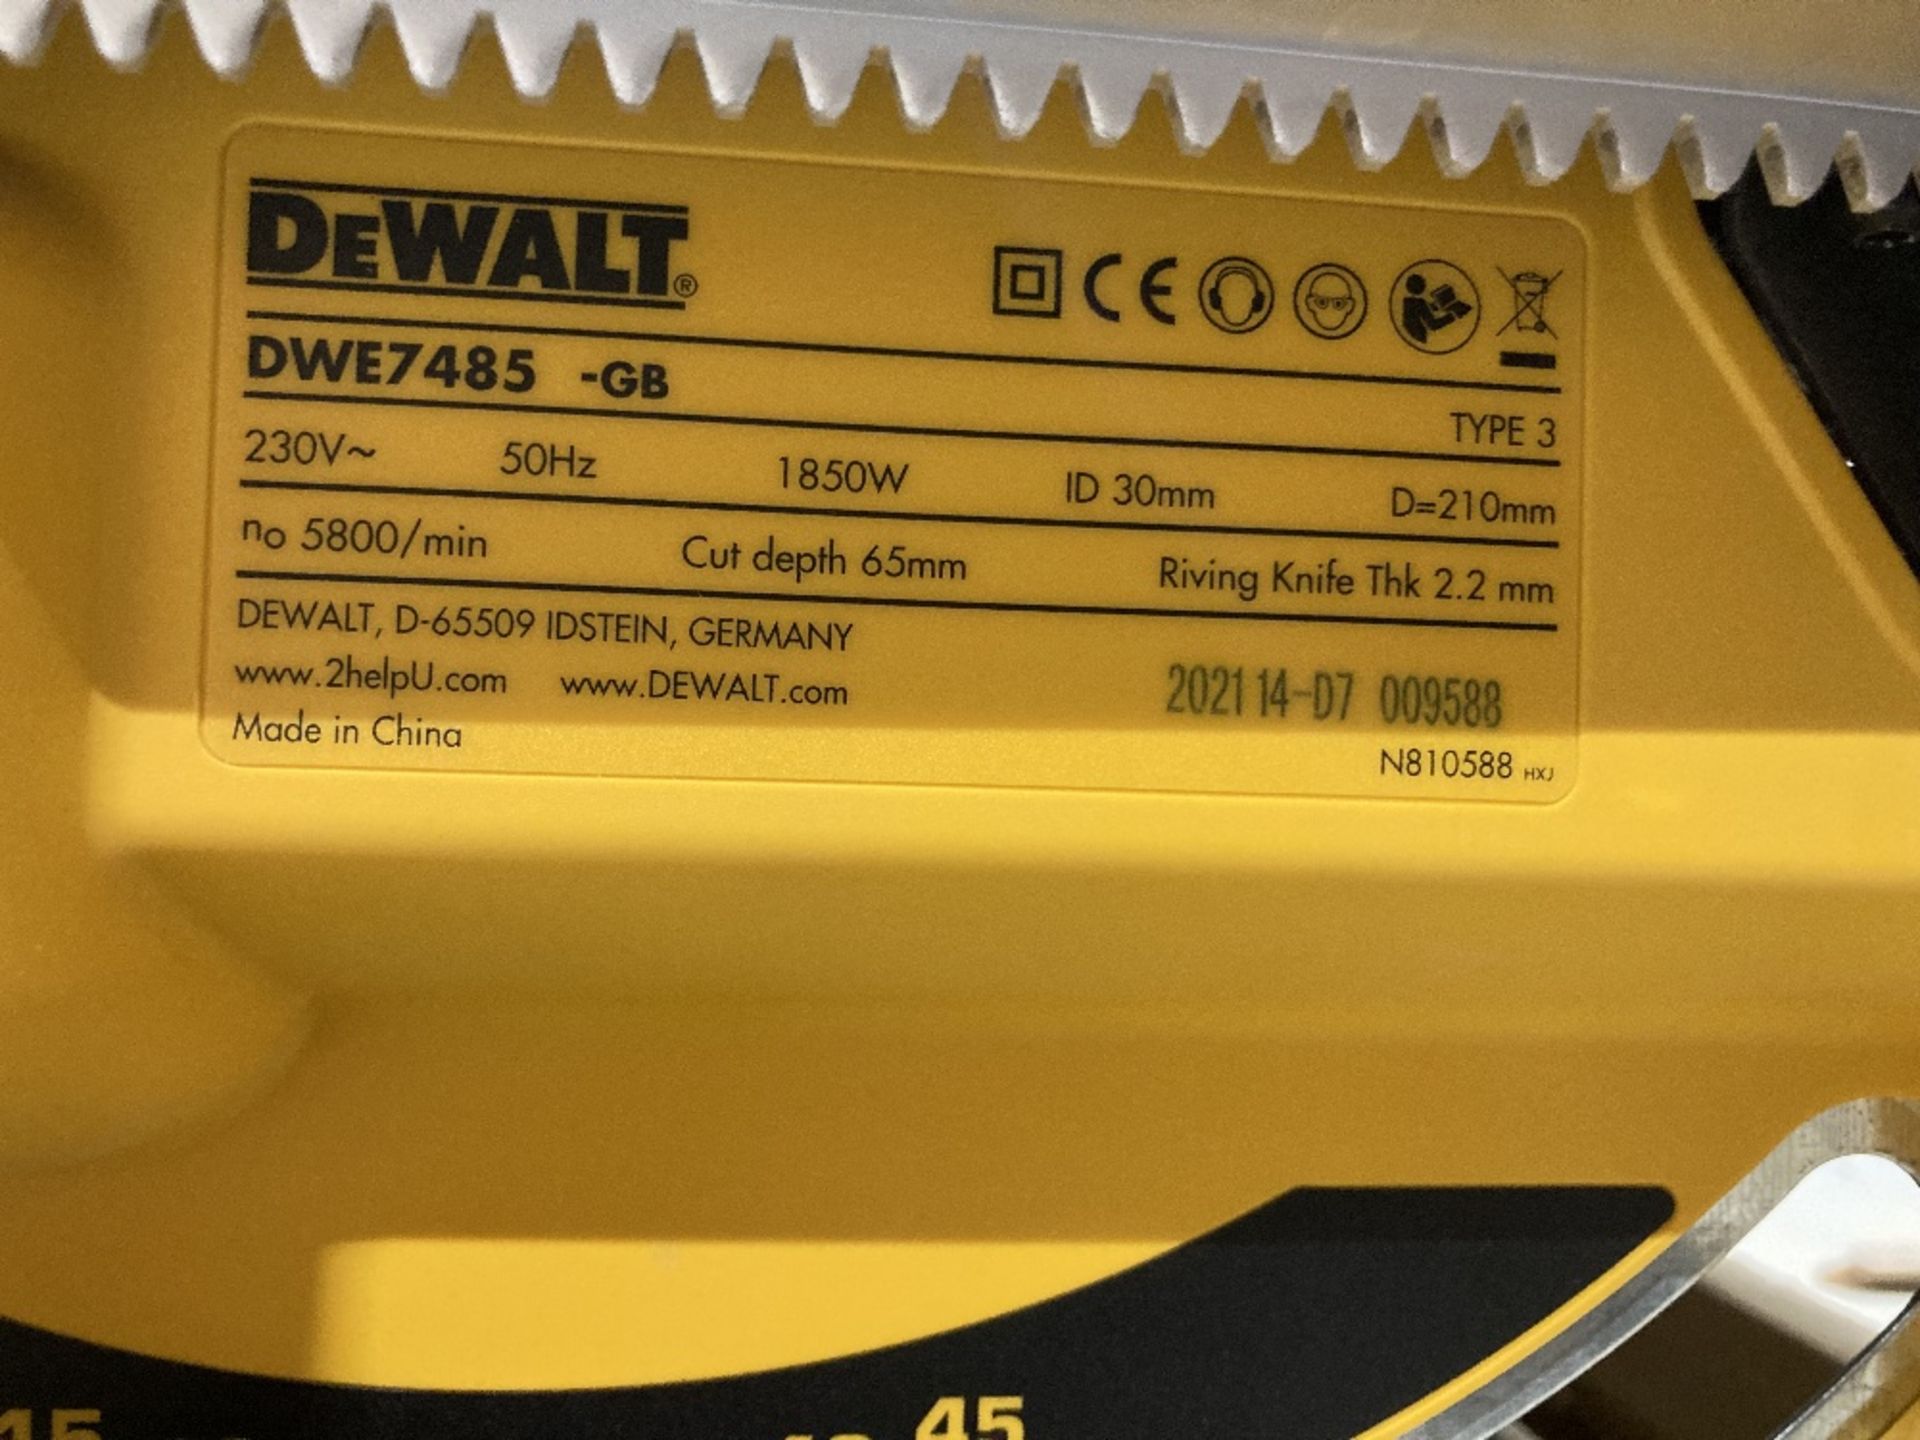 Dewalt DWE7485-GB 210mm Compact Table Saw - Image 5 of 6